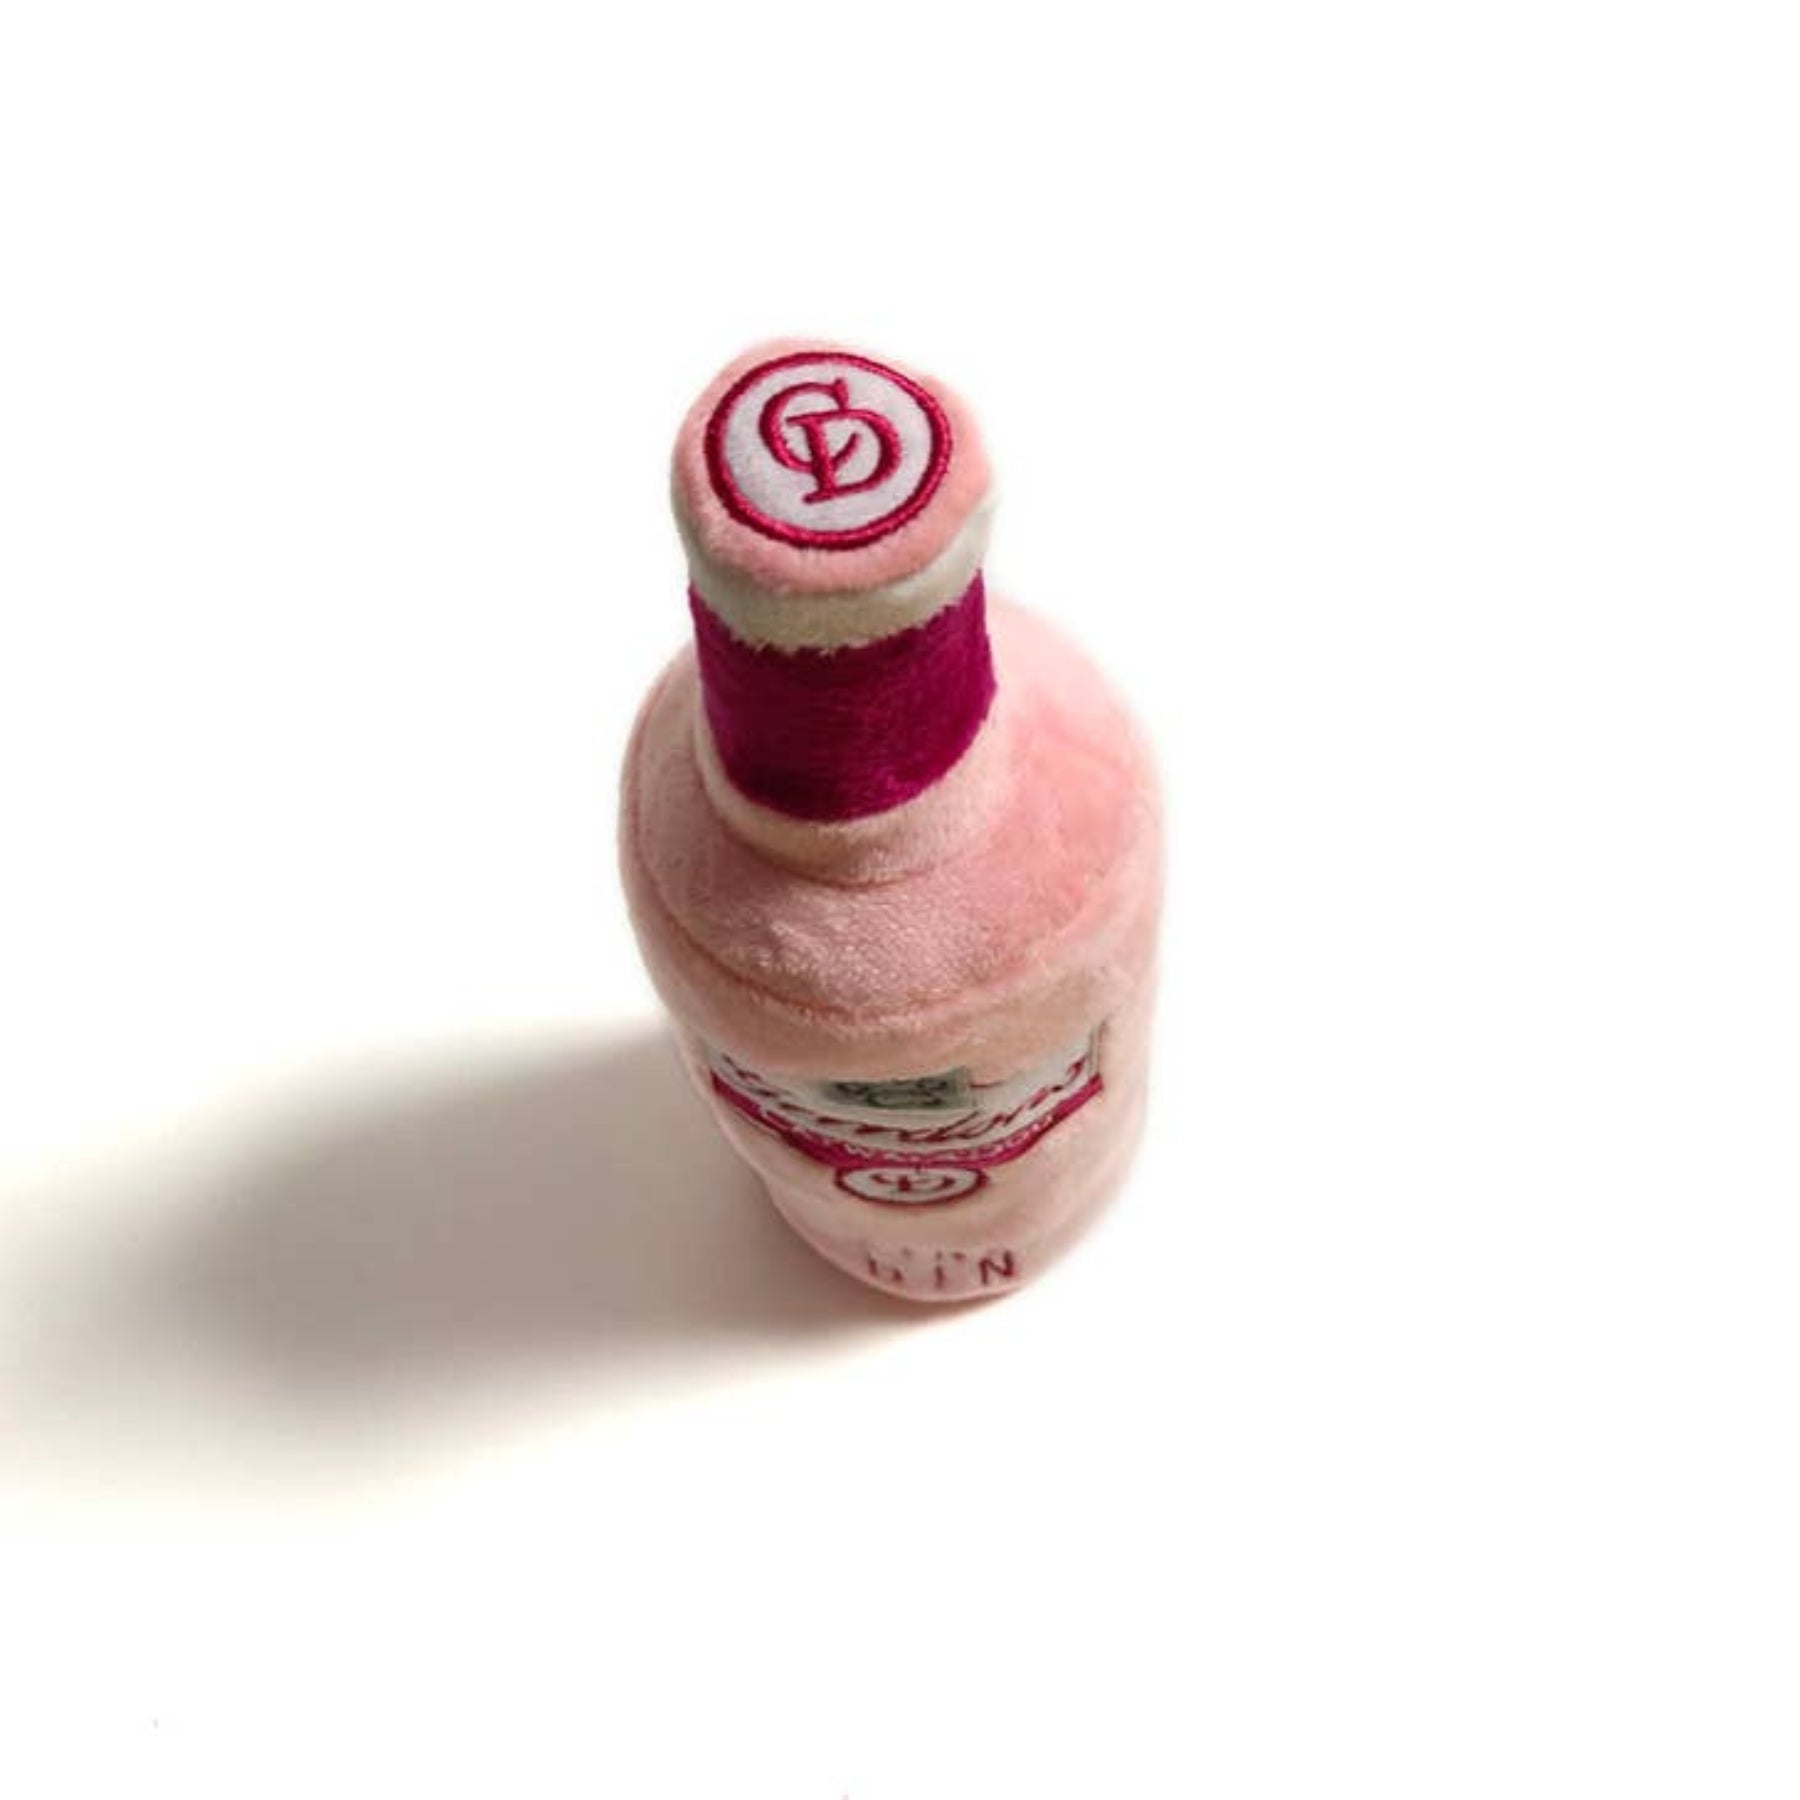 Grrrdon's Pink Gin Bottle Plush Dog Toy - Pooch Luxury